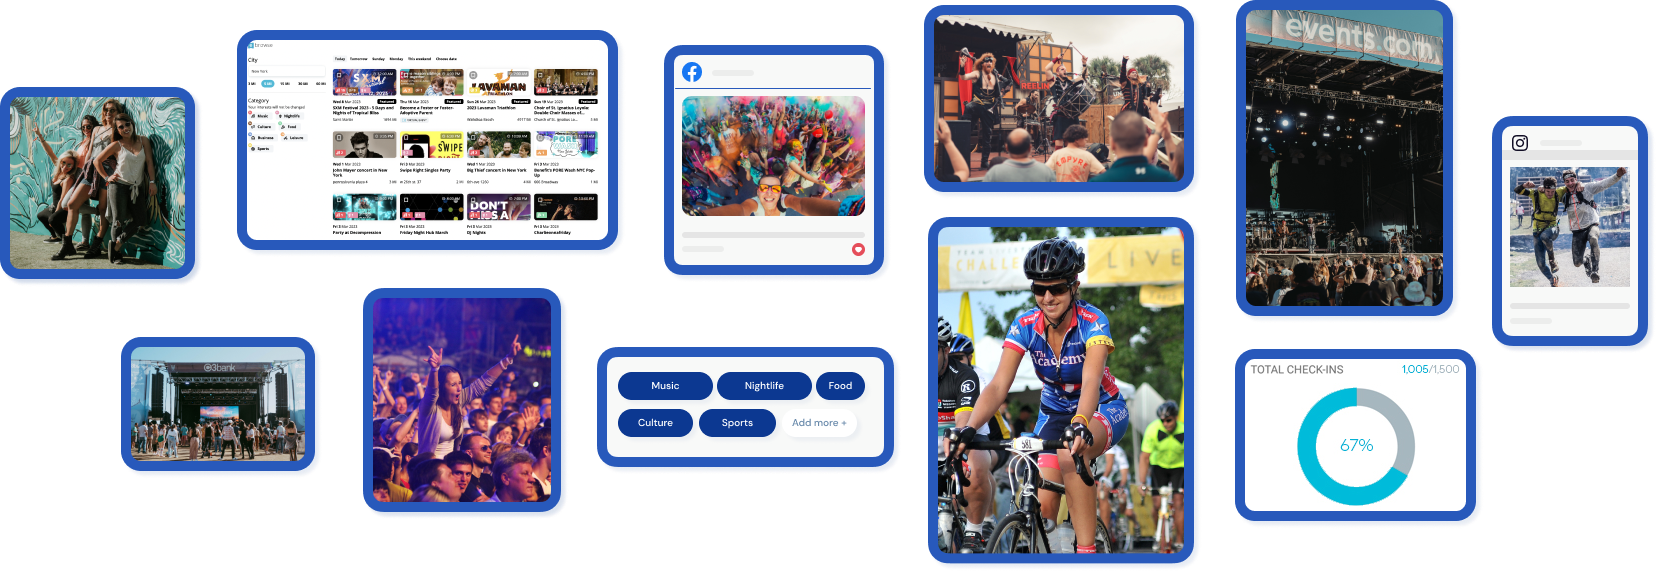 Collage of images showcasing events.com platform event management tools